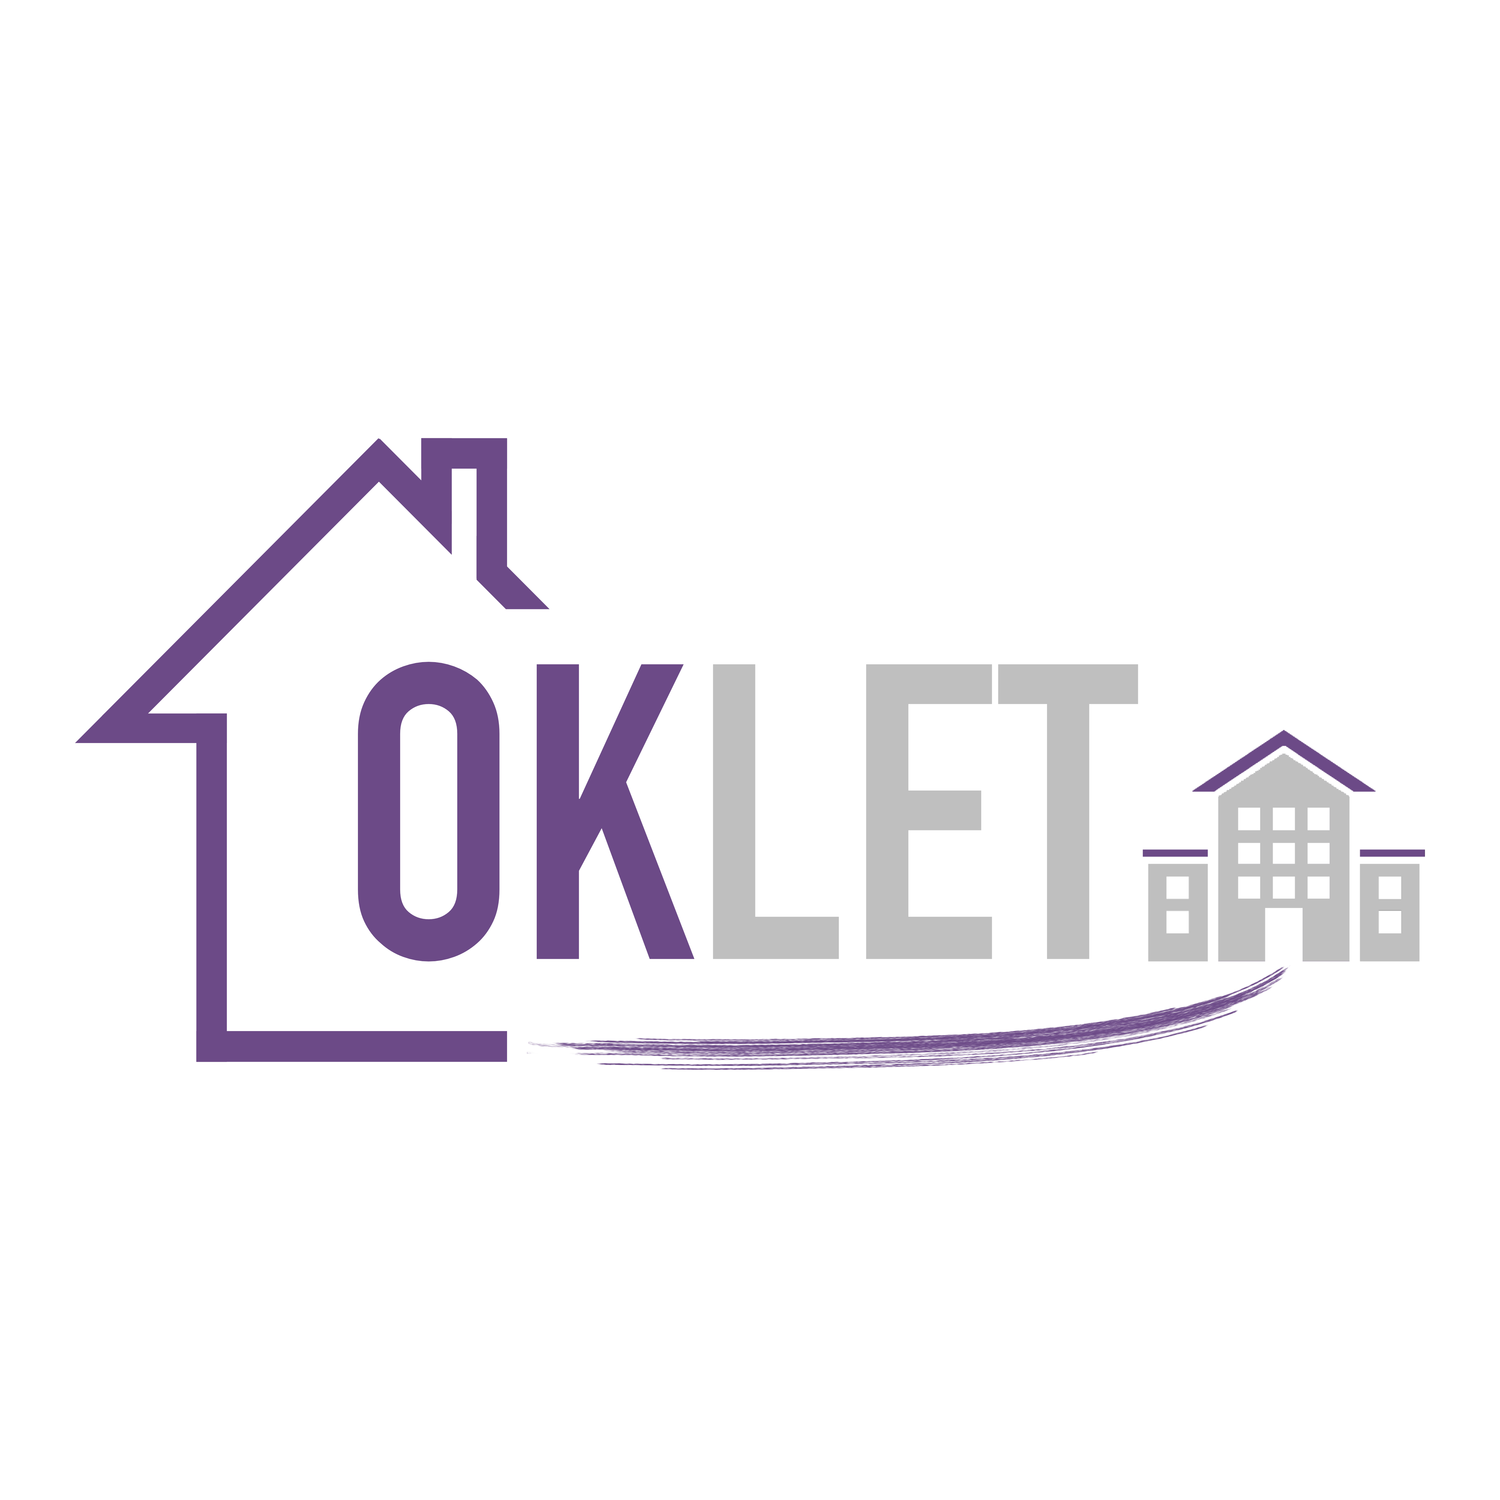 OK Let Ltd